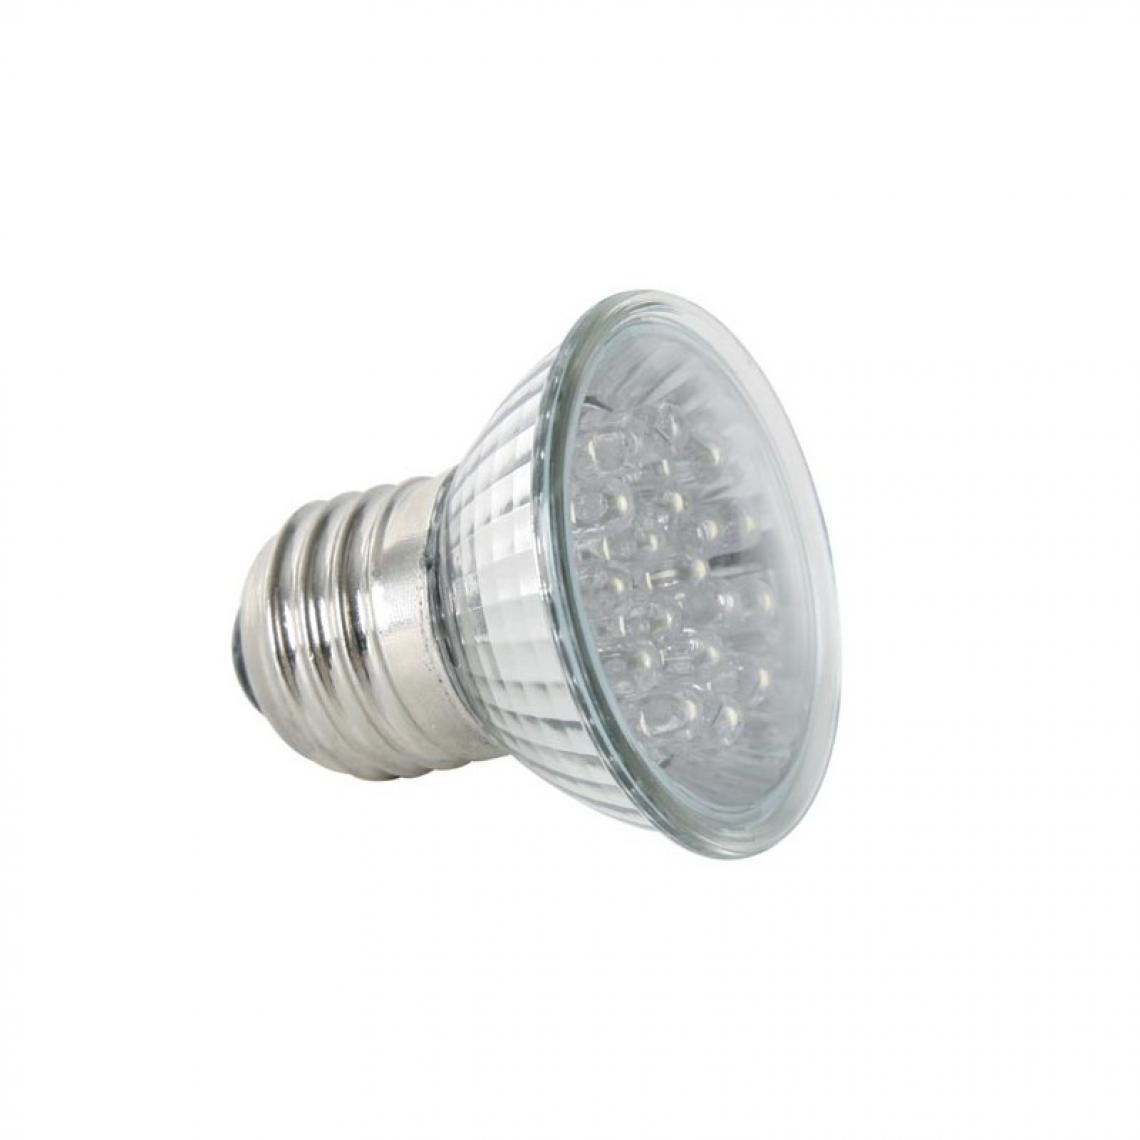 Perel - Ampoule Led Jaune - E27 - 240Vca - 18 Leds - Ampoules LED